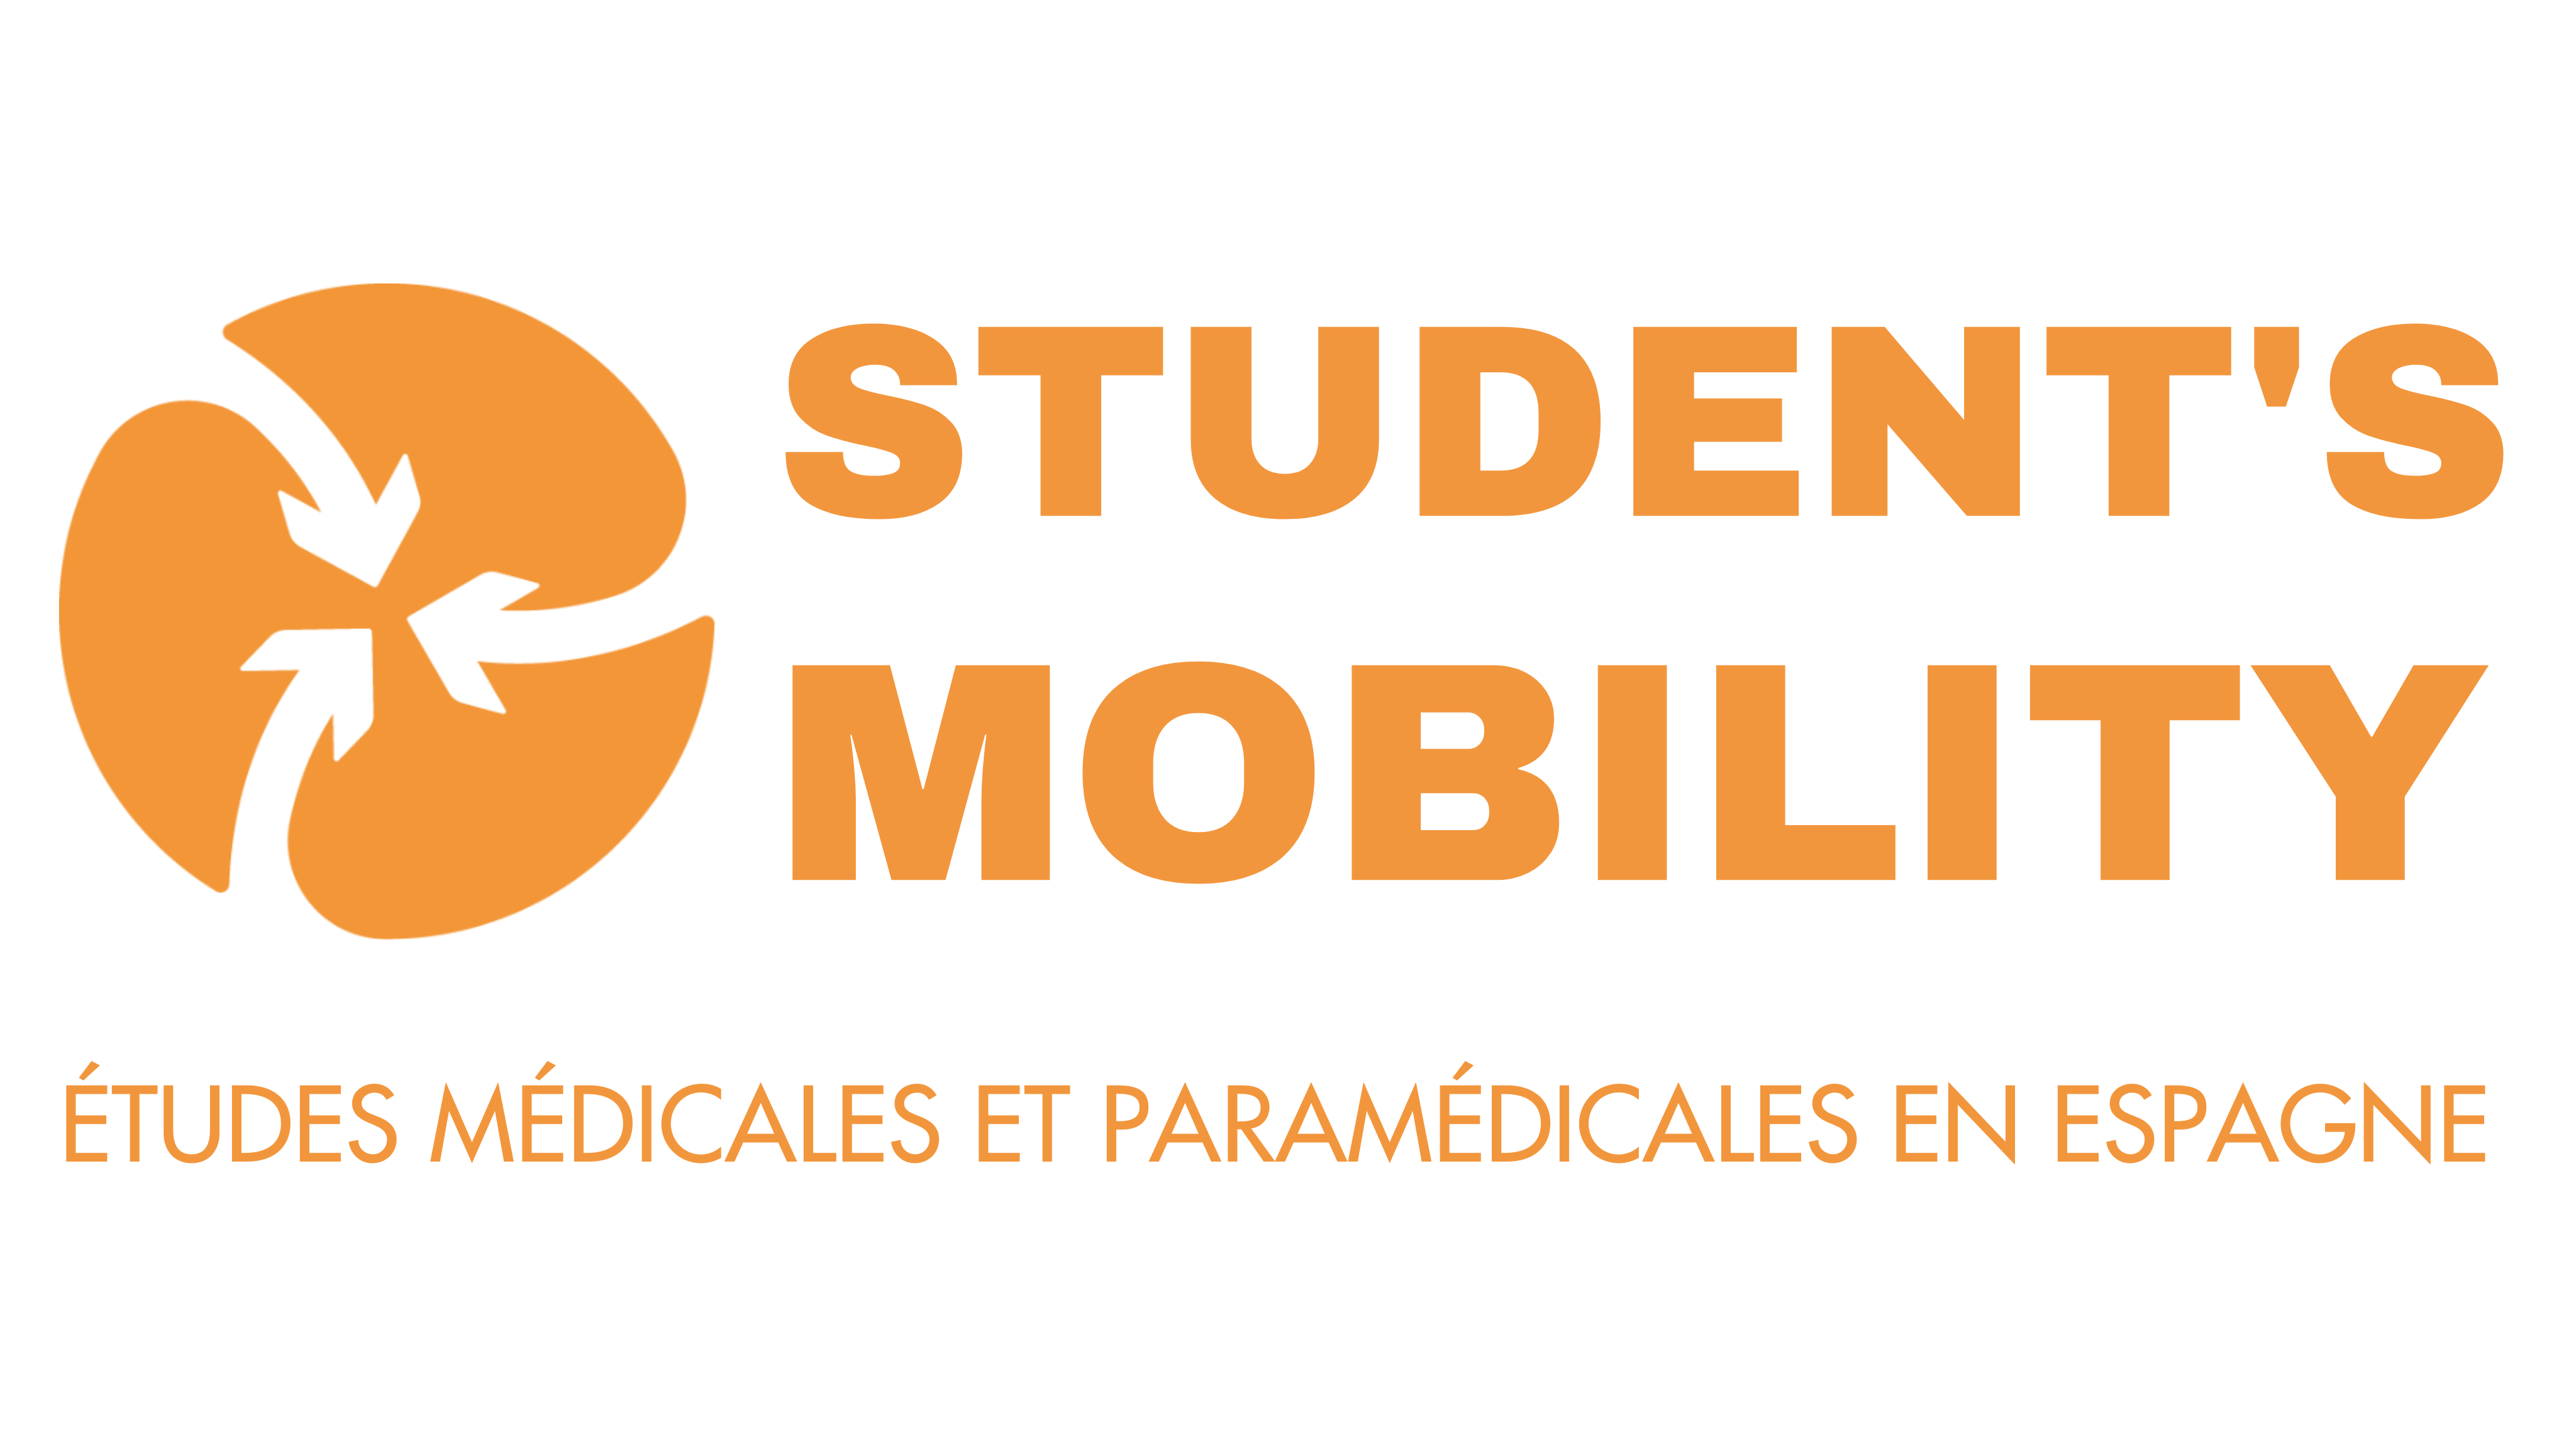 student s mobility logo orange